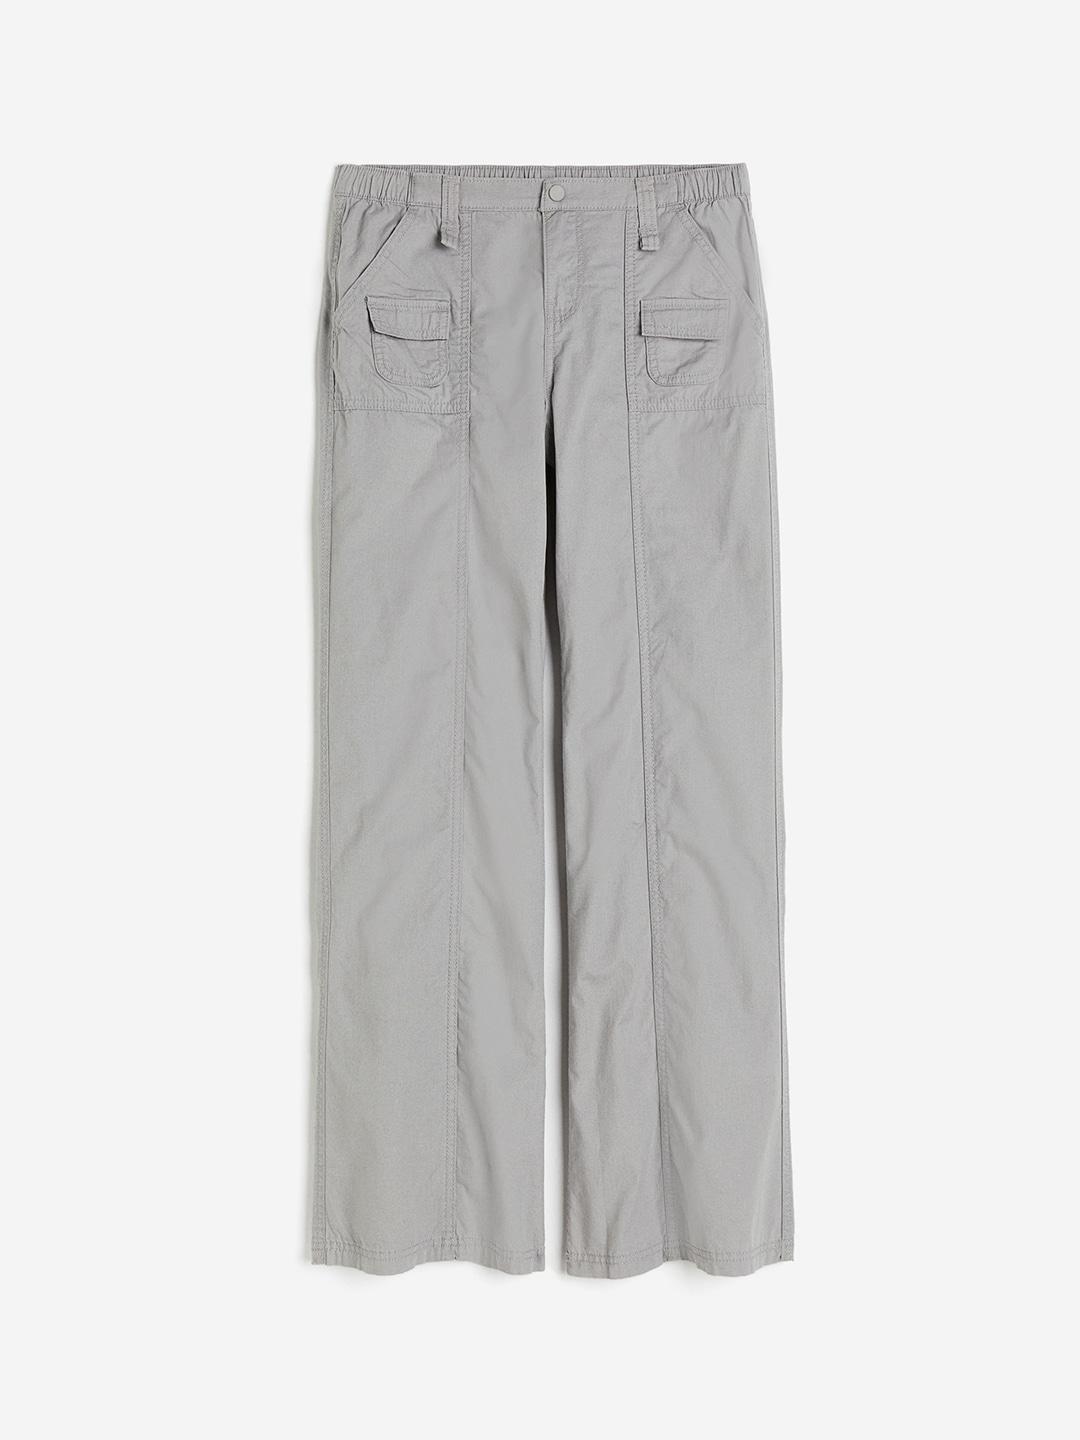 H&M Women Canvas Cargo Trousers